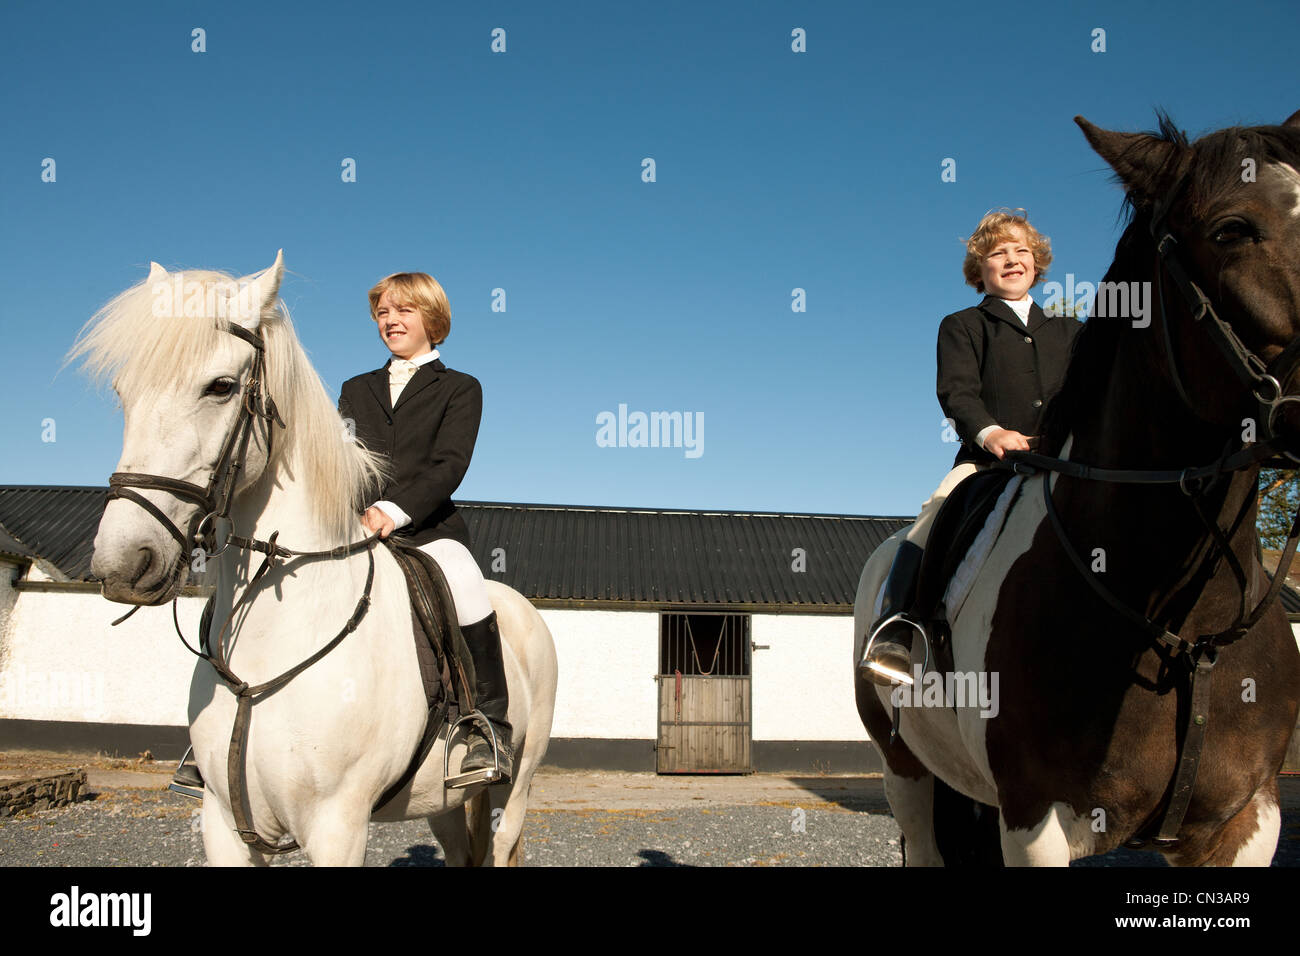 Two boys riding horses Stock Photo